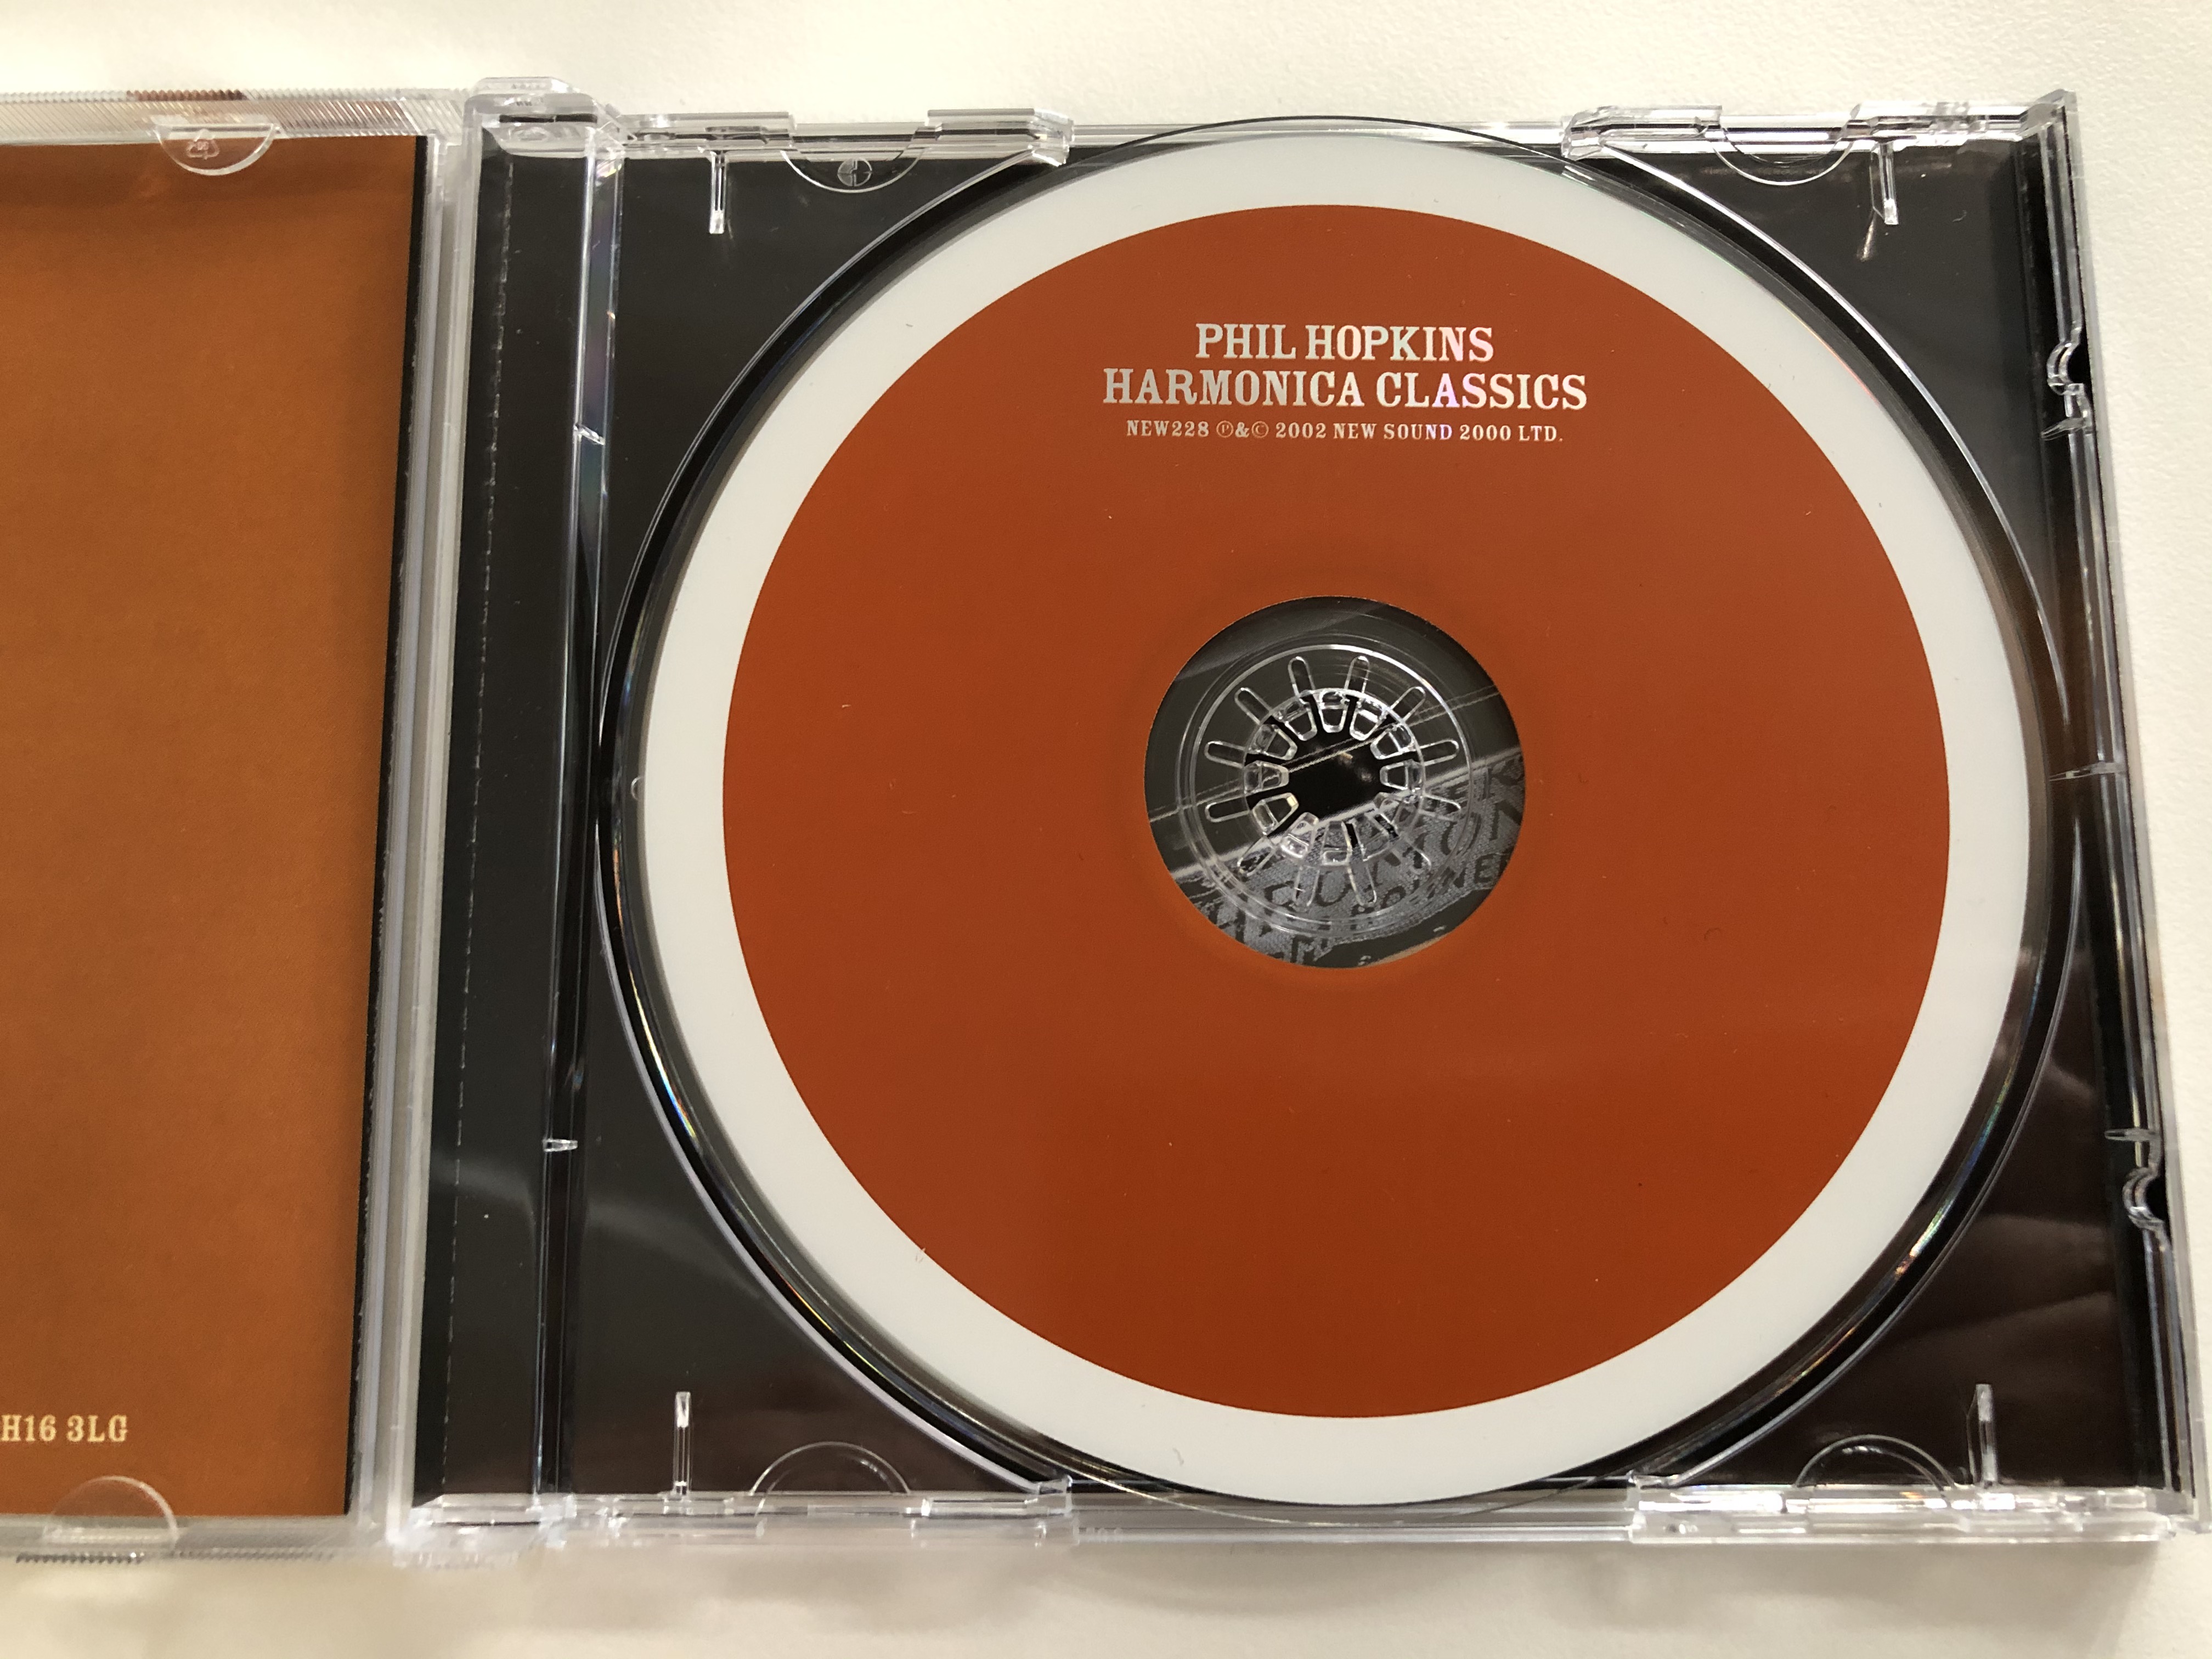 phil-hopkins-harmonica-classics-new-sound-2000-ltd.-audio-cd-2002-new228-3-.jpg